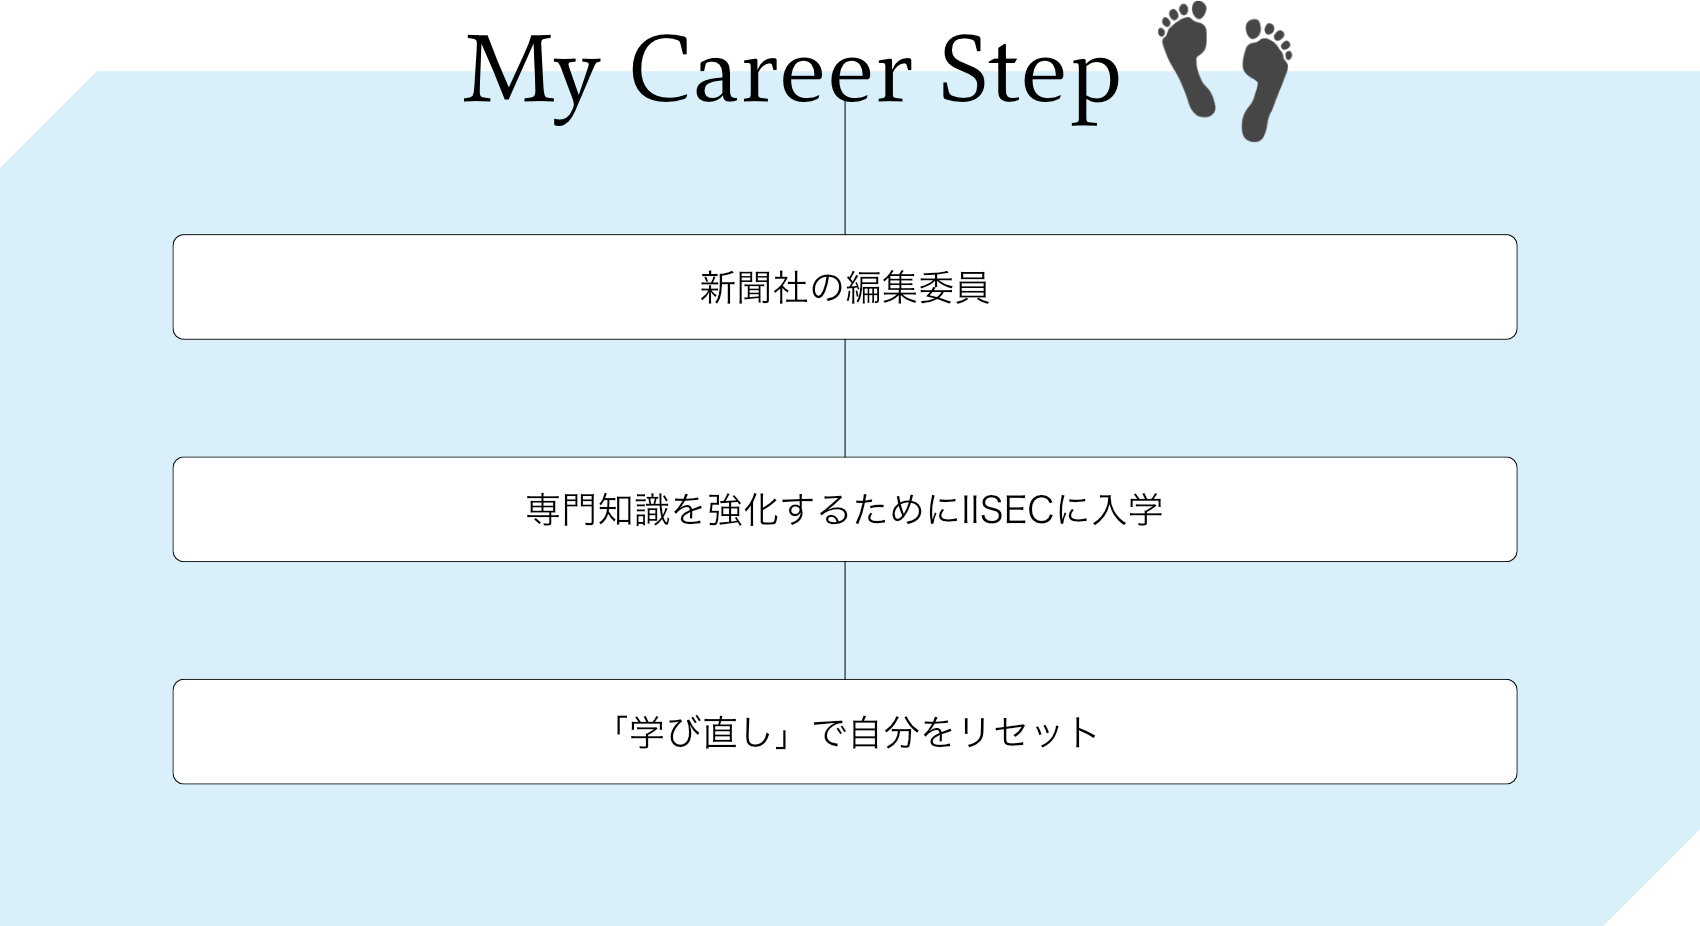 ]q - My Career Step